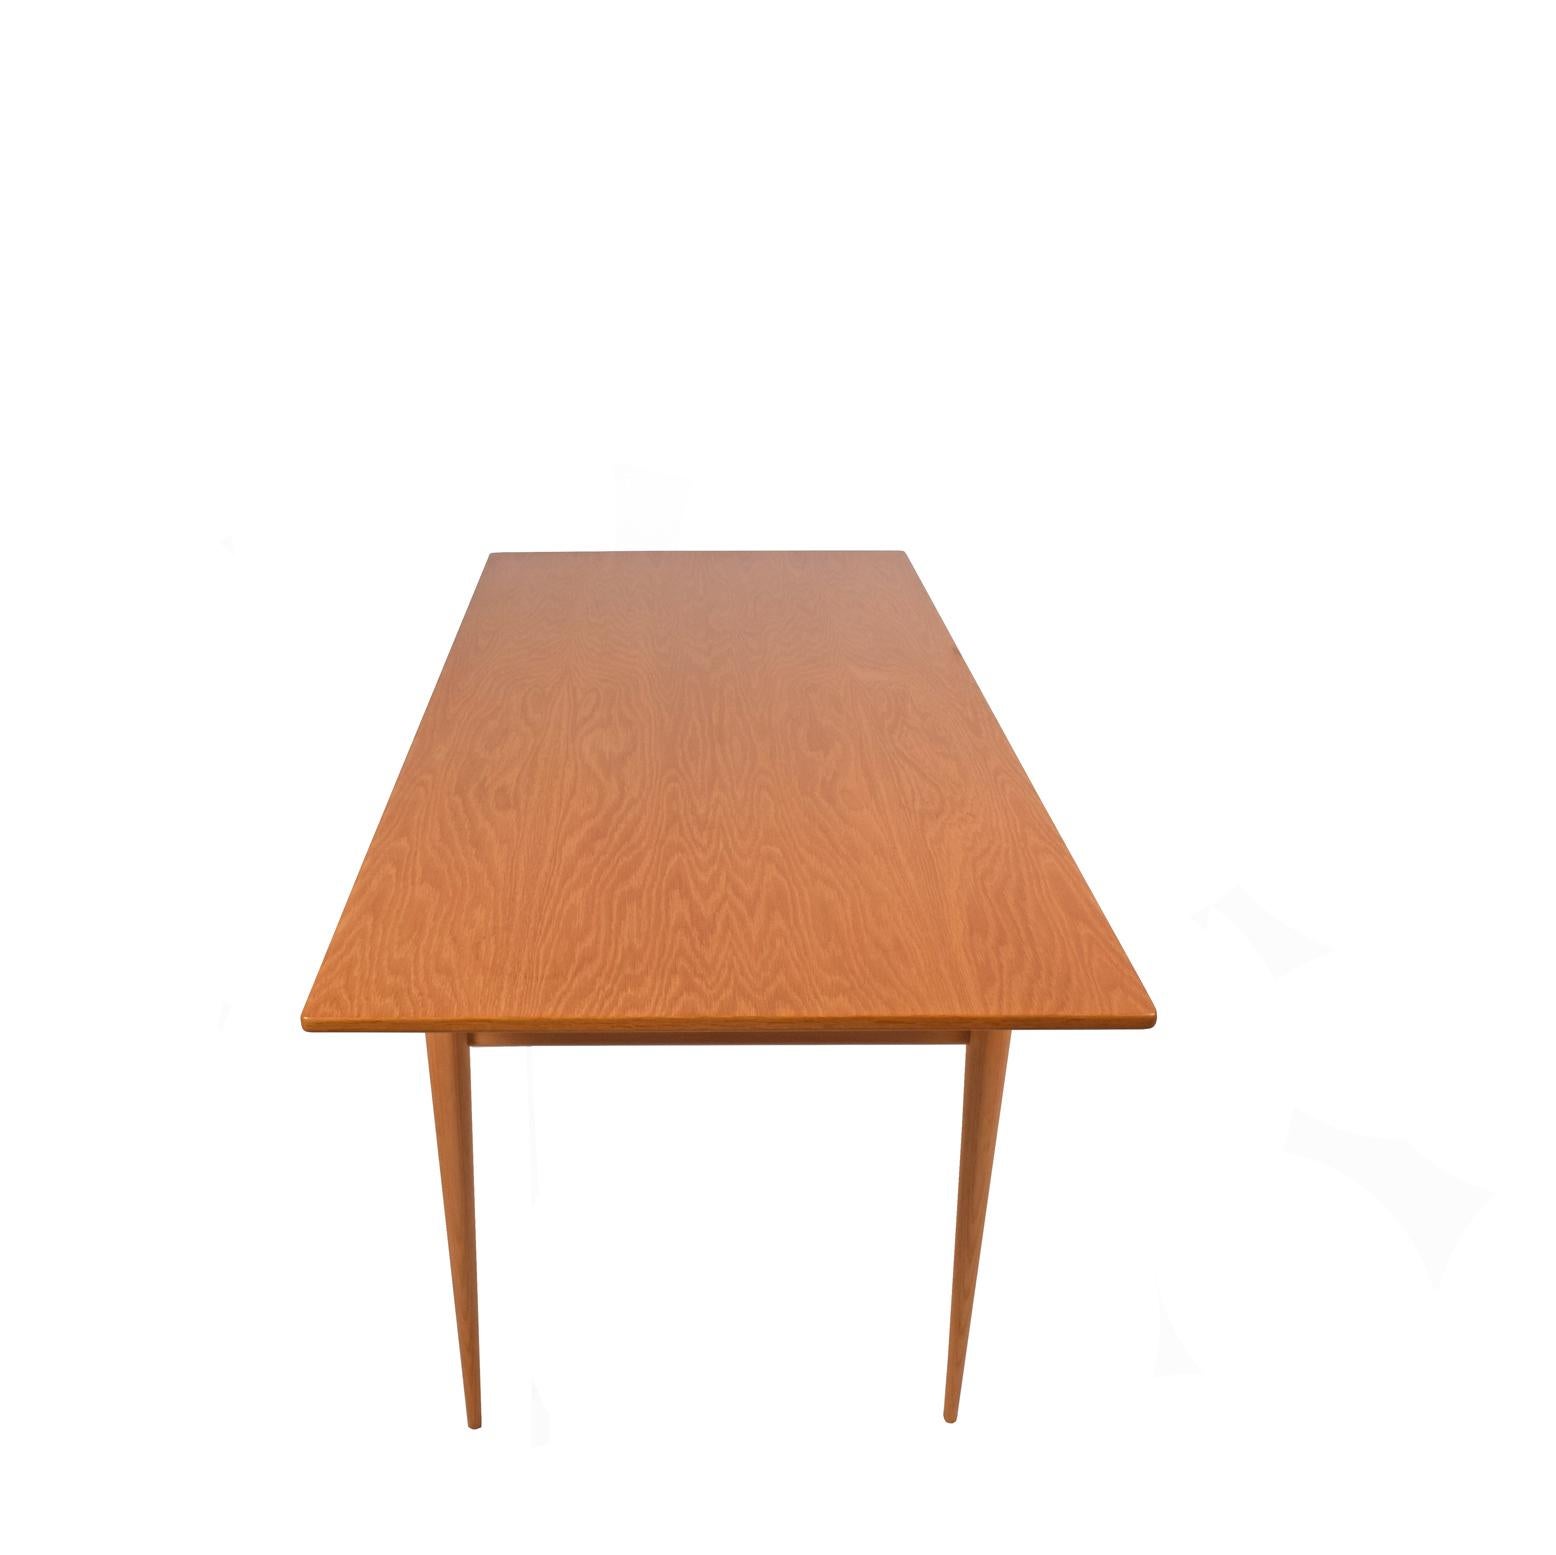 Scandinavian Modern Bruno Mathsson Table / Desk made by Karl Mathsson, 1966